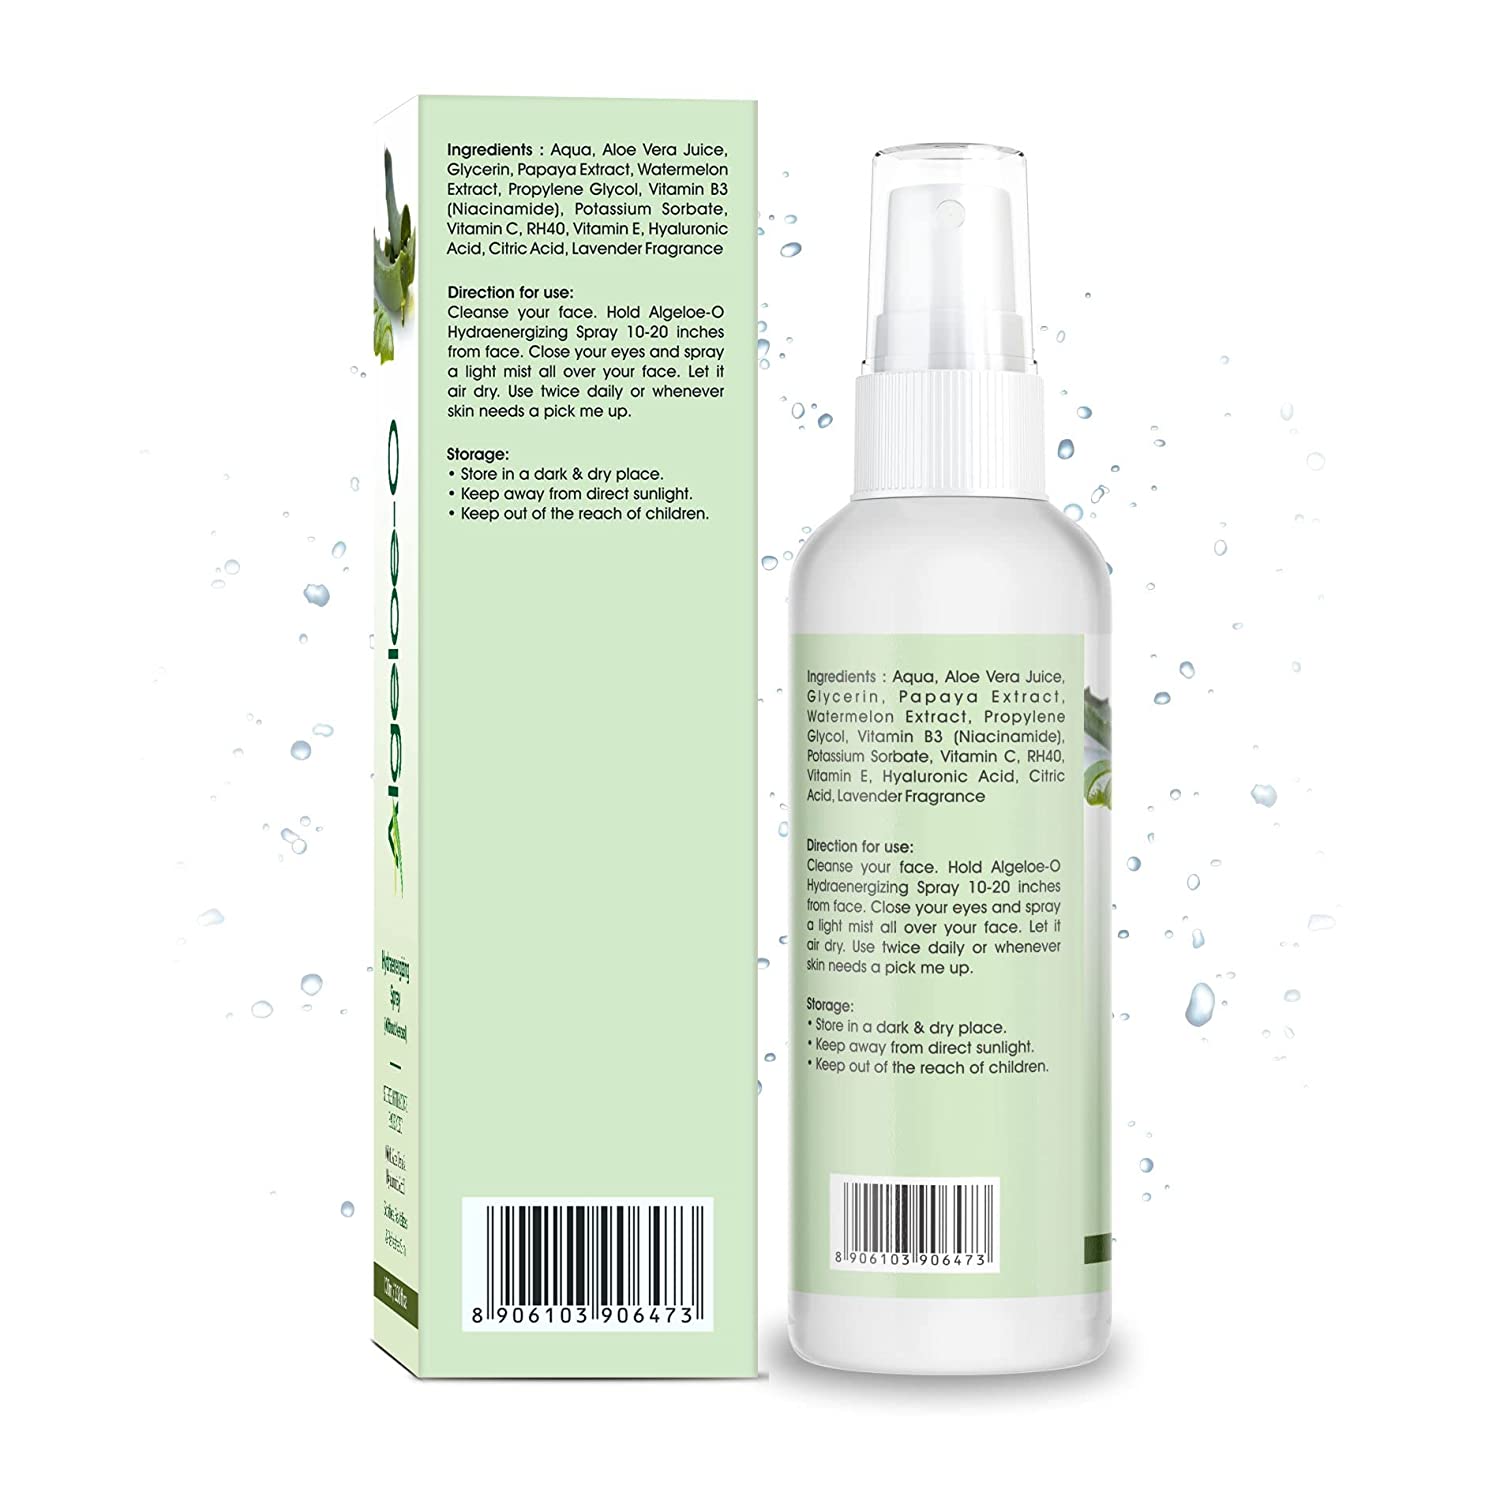 Shoprythm Algeloe Algeloe-O Hydraenergizing Super Hydrating Face Mist Spray